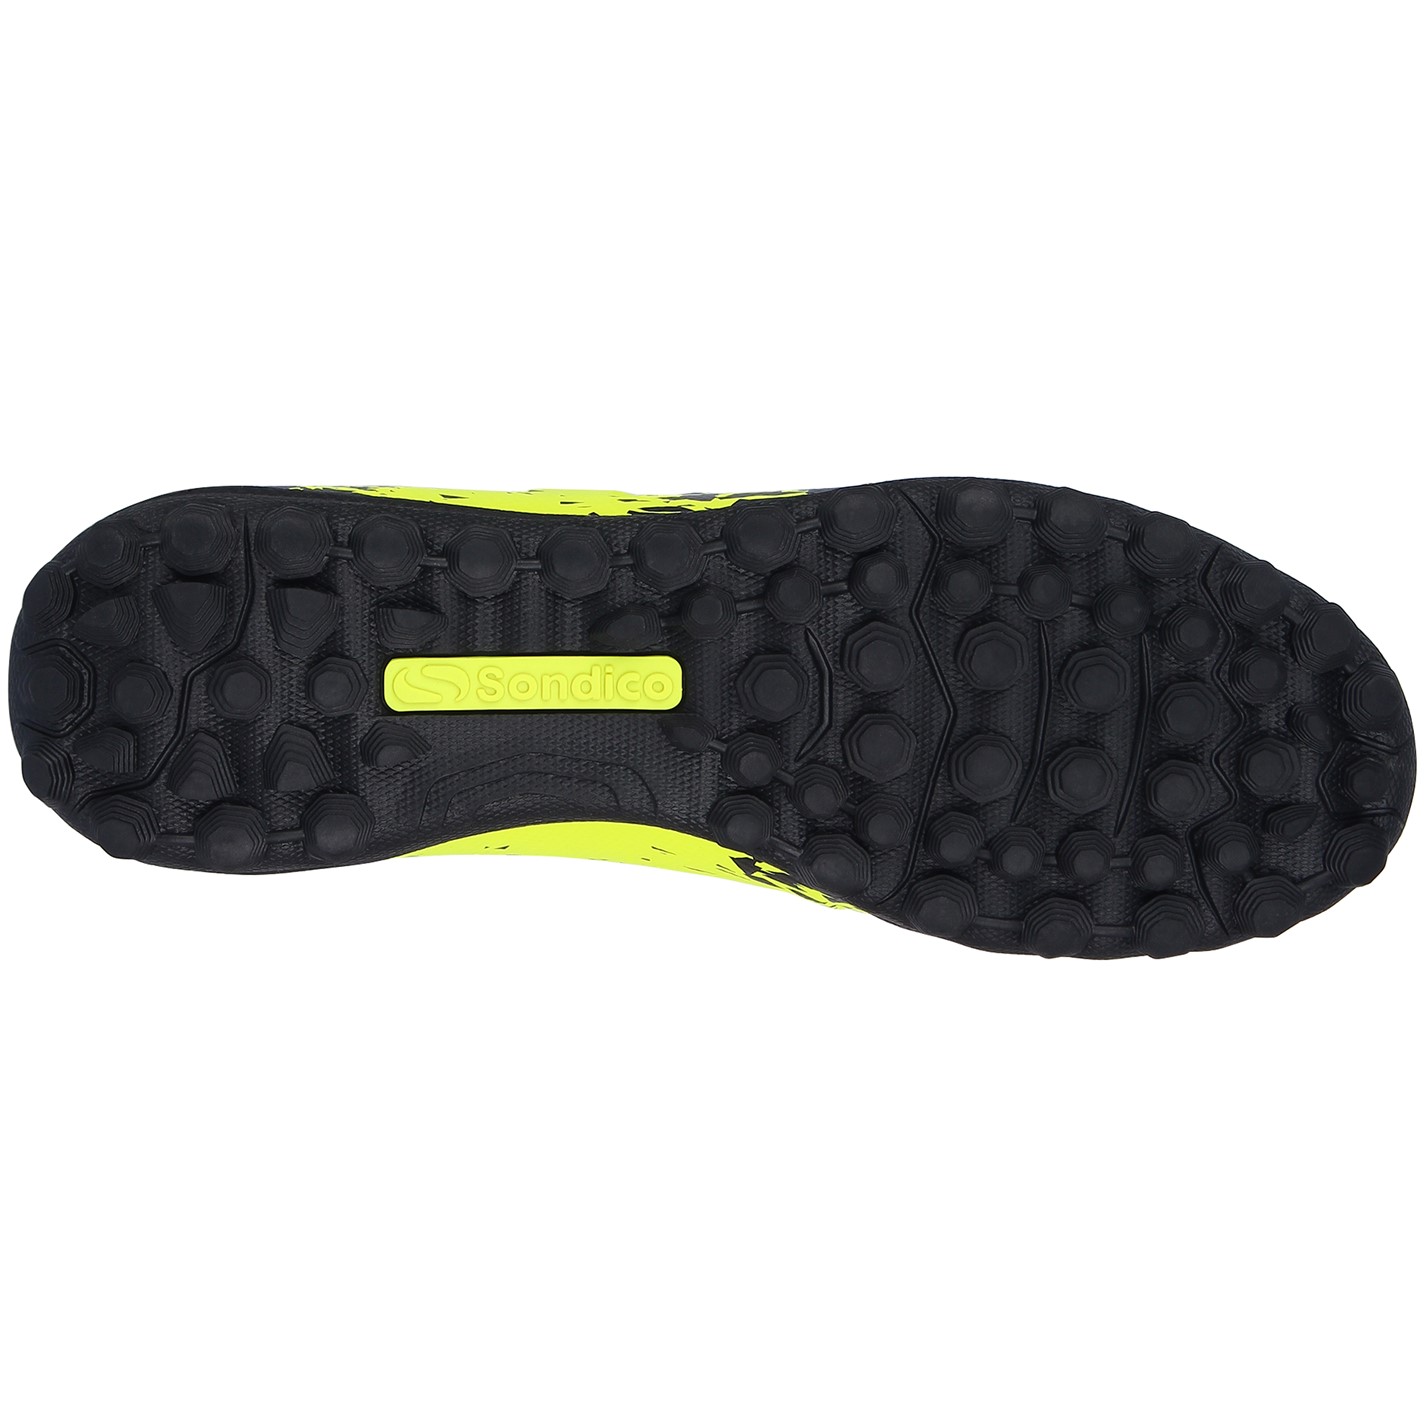 Adidasi Gazon Sintetic Sondico negru galben